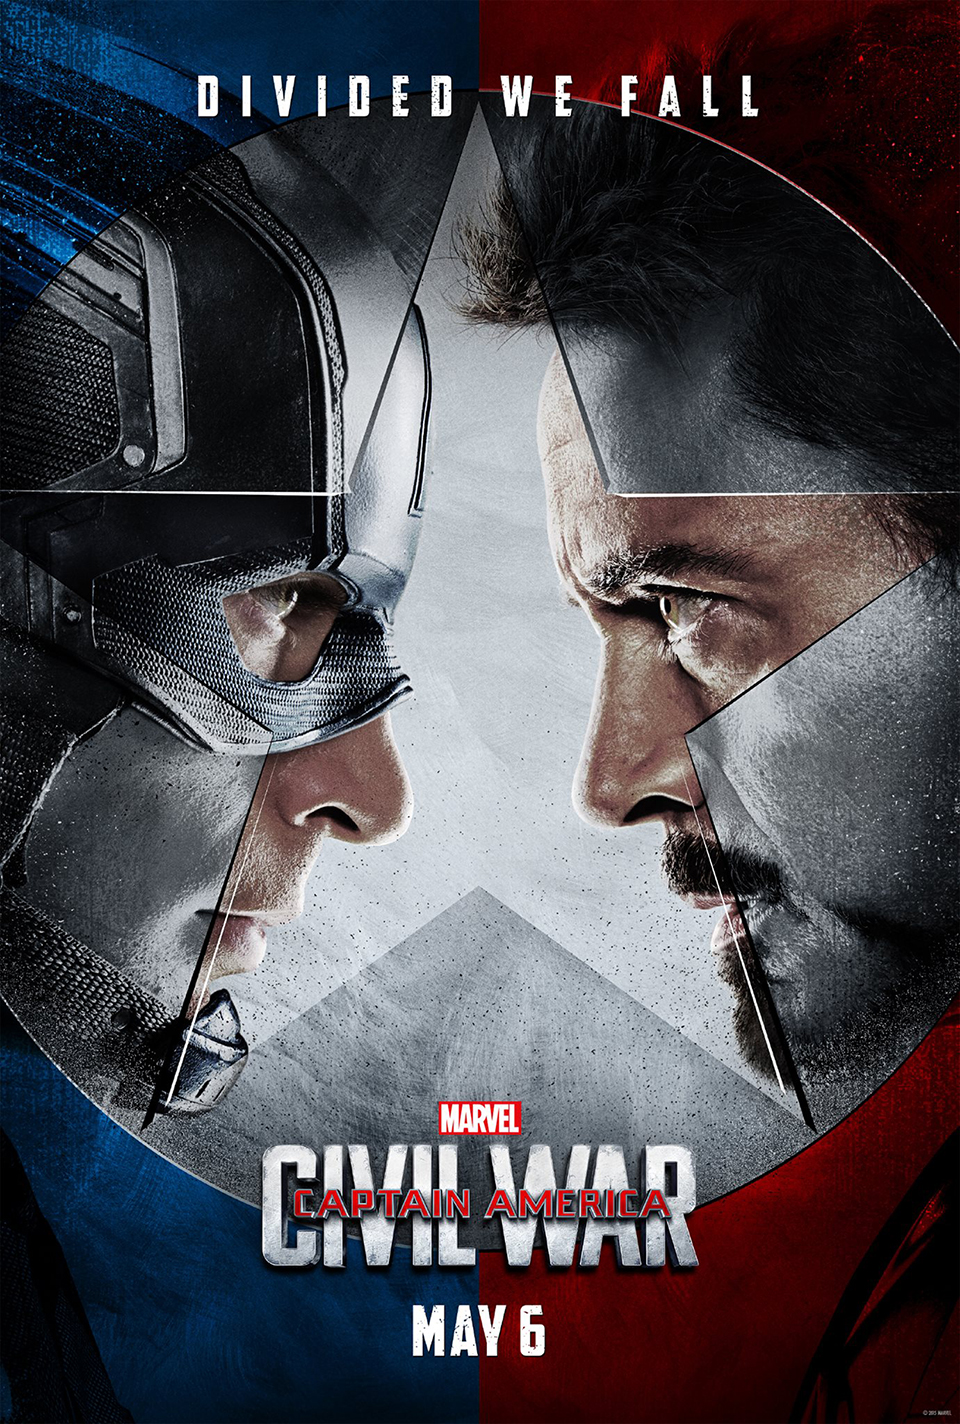 Capt. America: Civil War (Trailer)